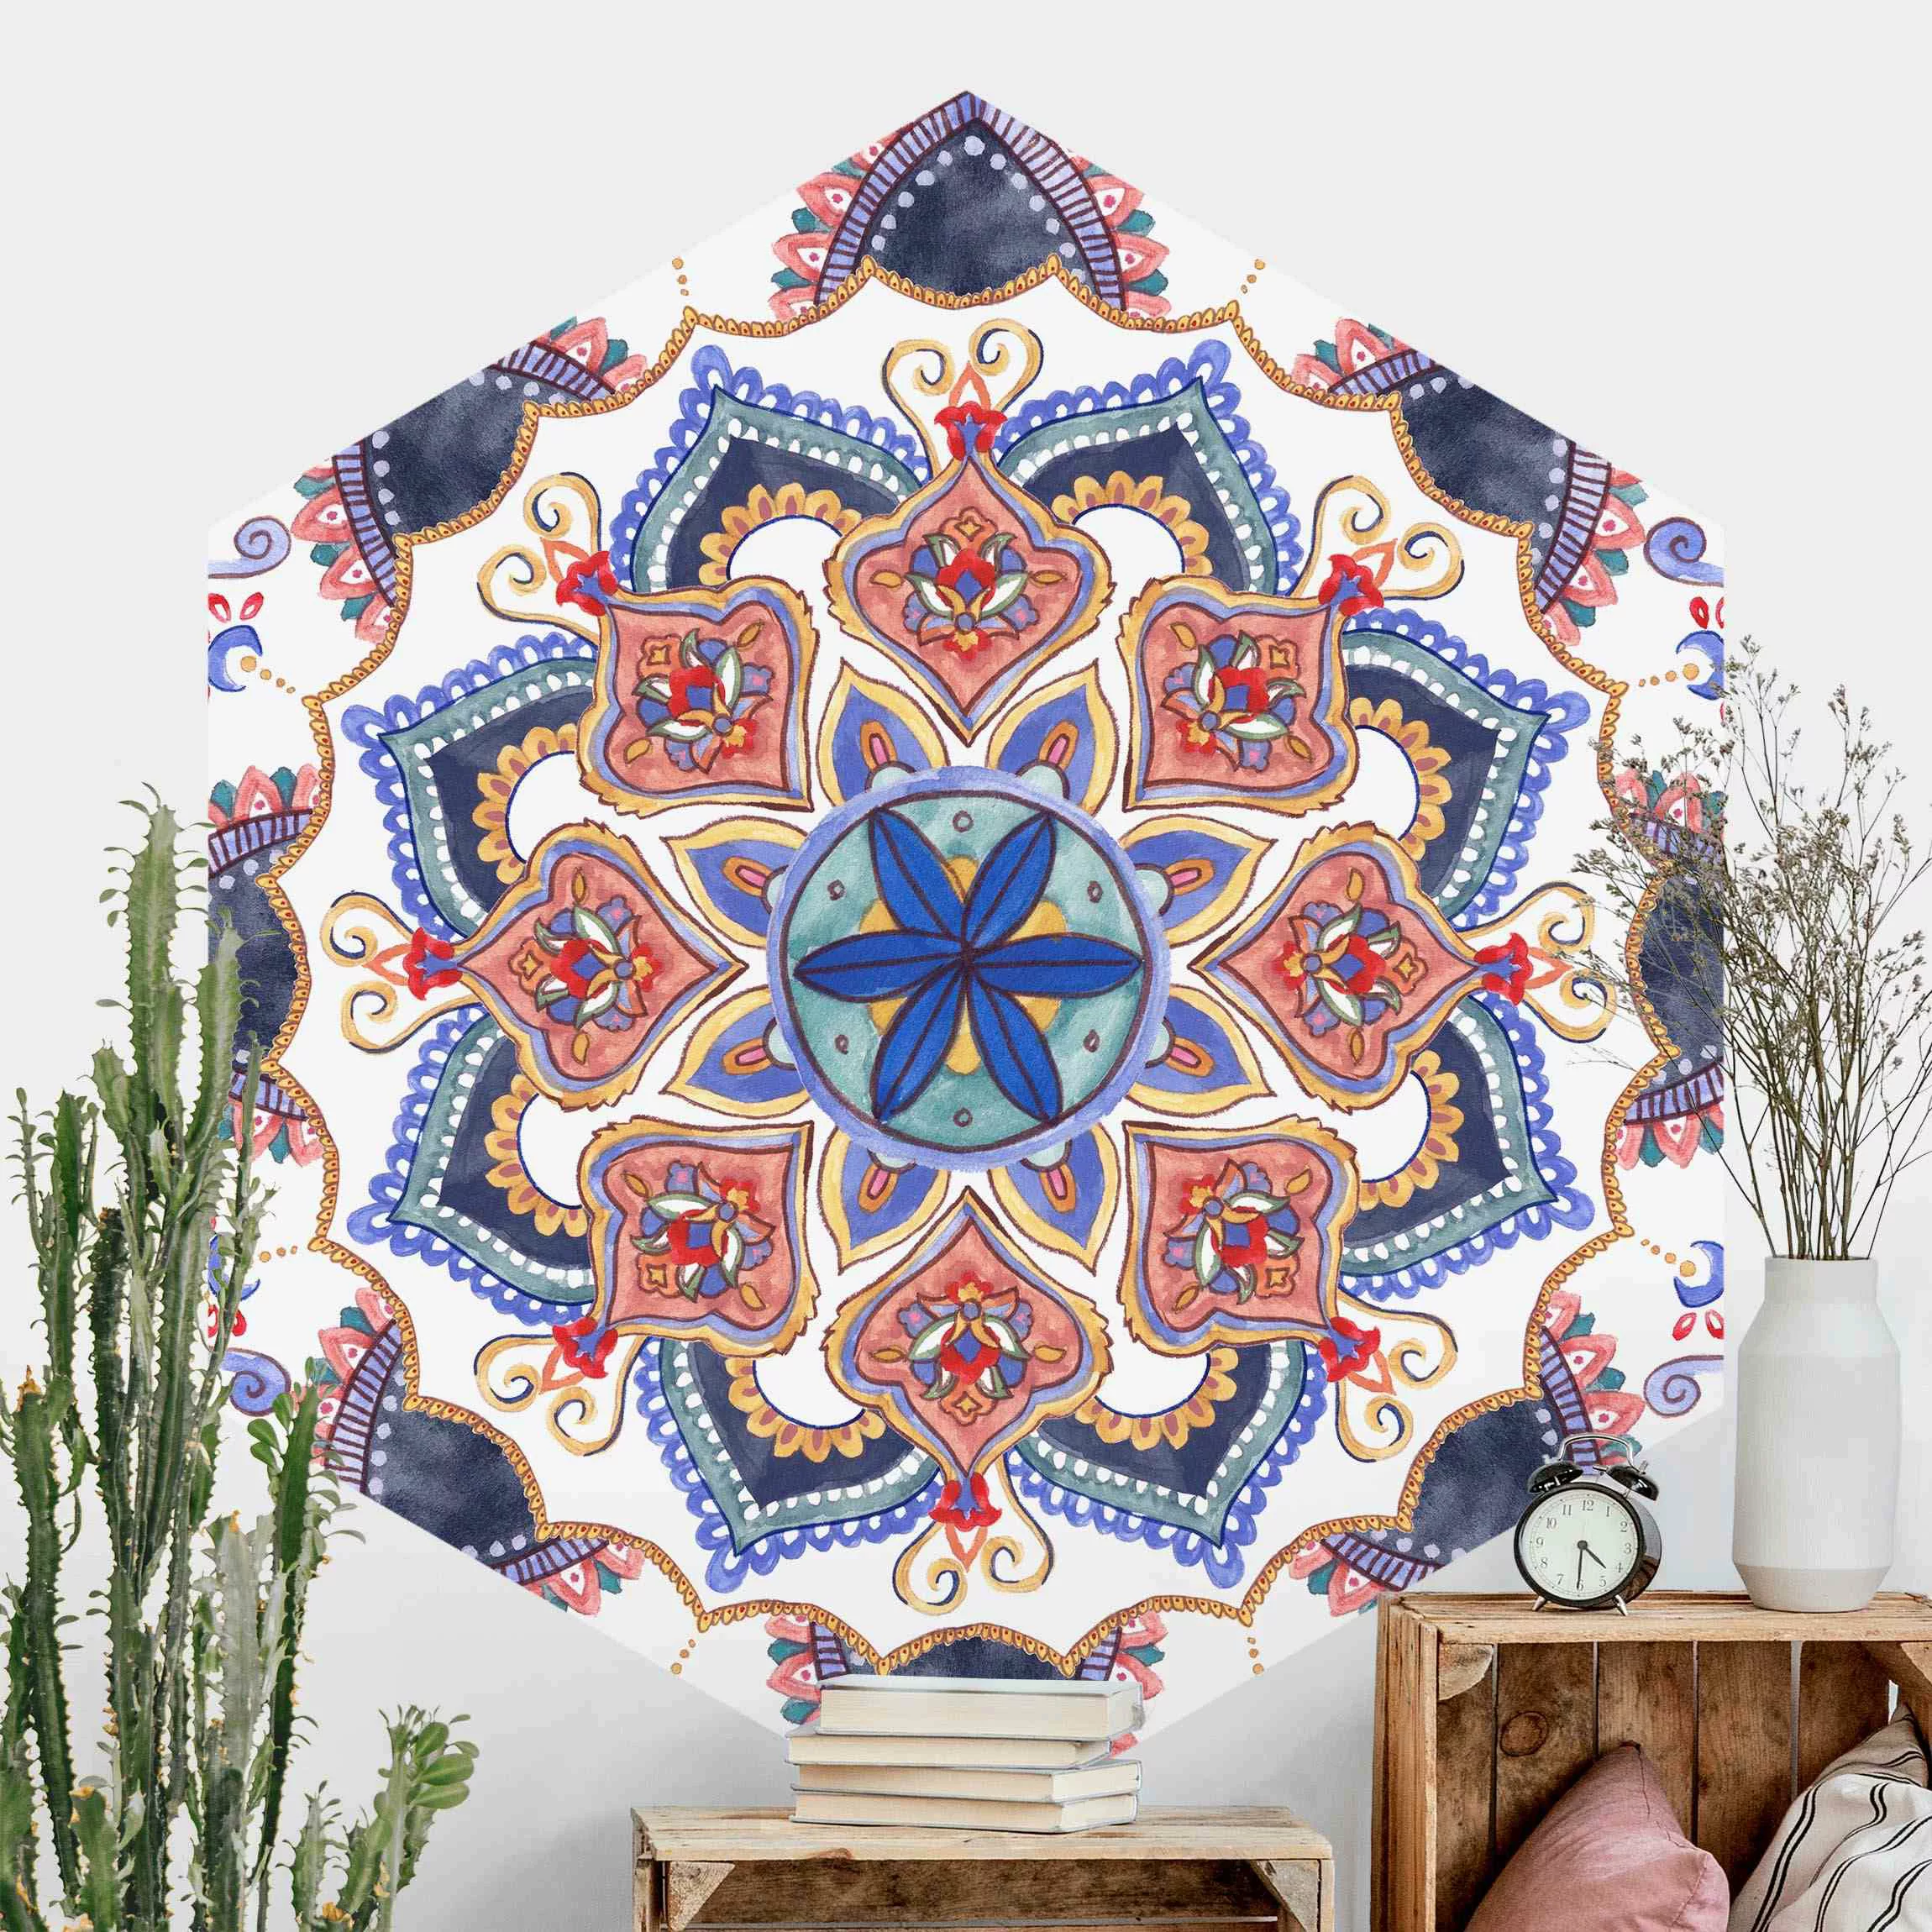 Hexagon Mustertapete selbstklebend Mandala Meditation Mantra günstig online kaufen